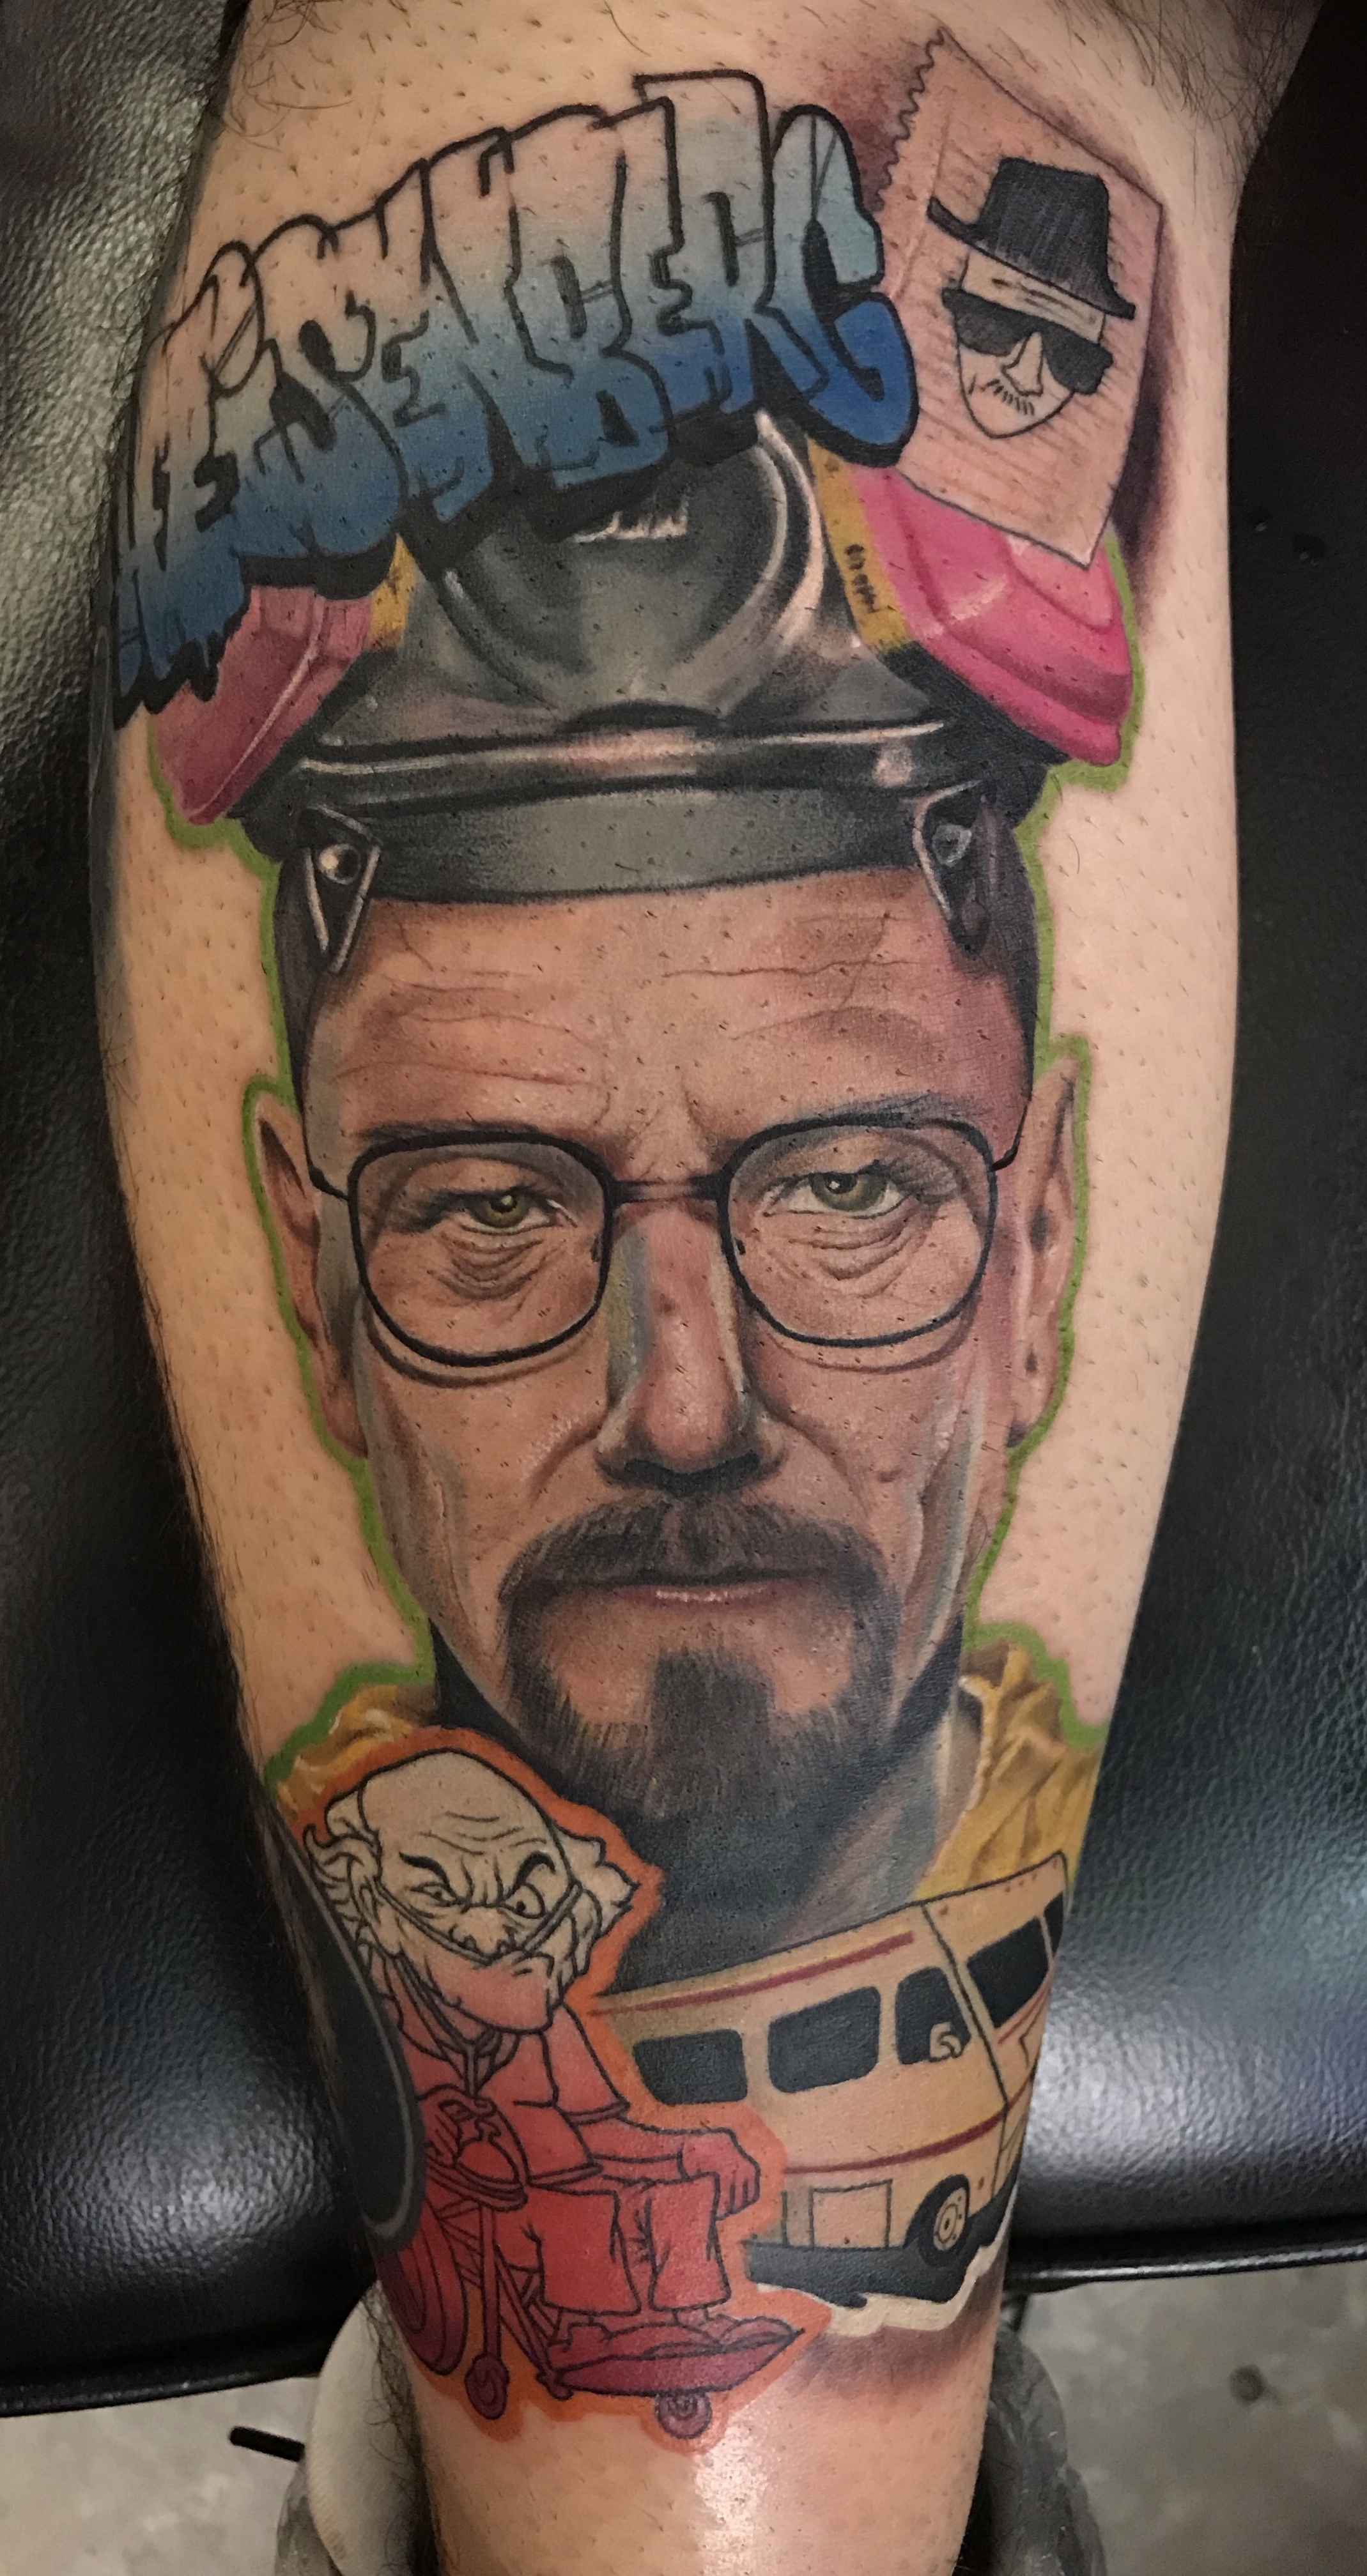 Realism tattoo of Heisenberg from Breaking Bad